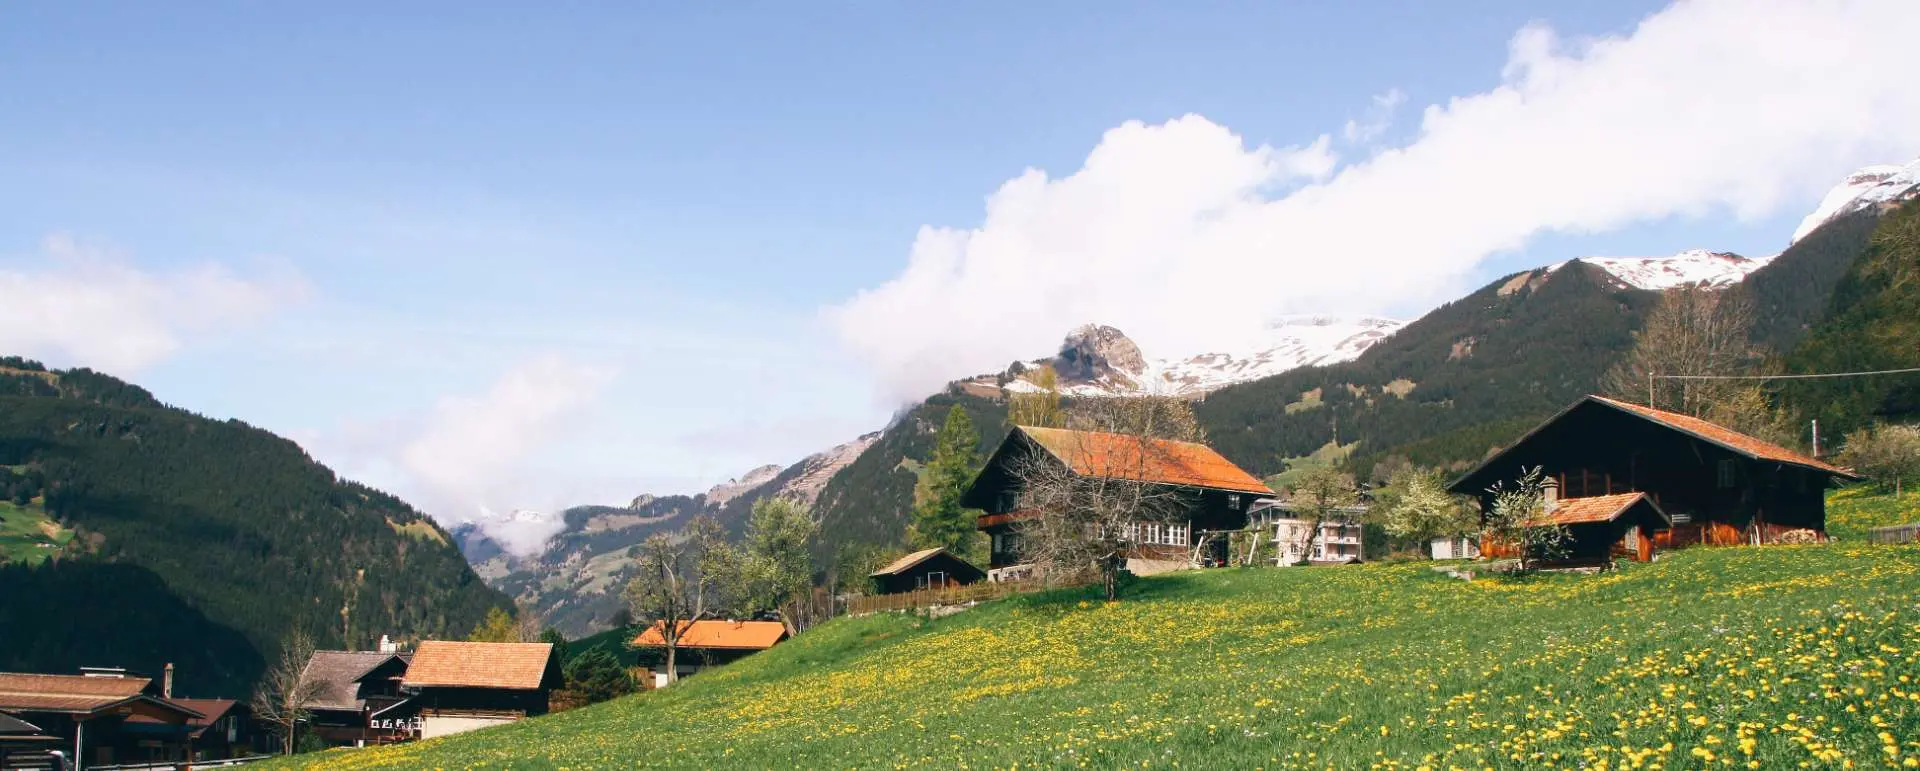 Bernese Highlands - Luxury group accommodation for travelers